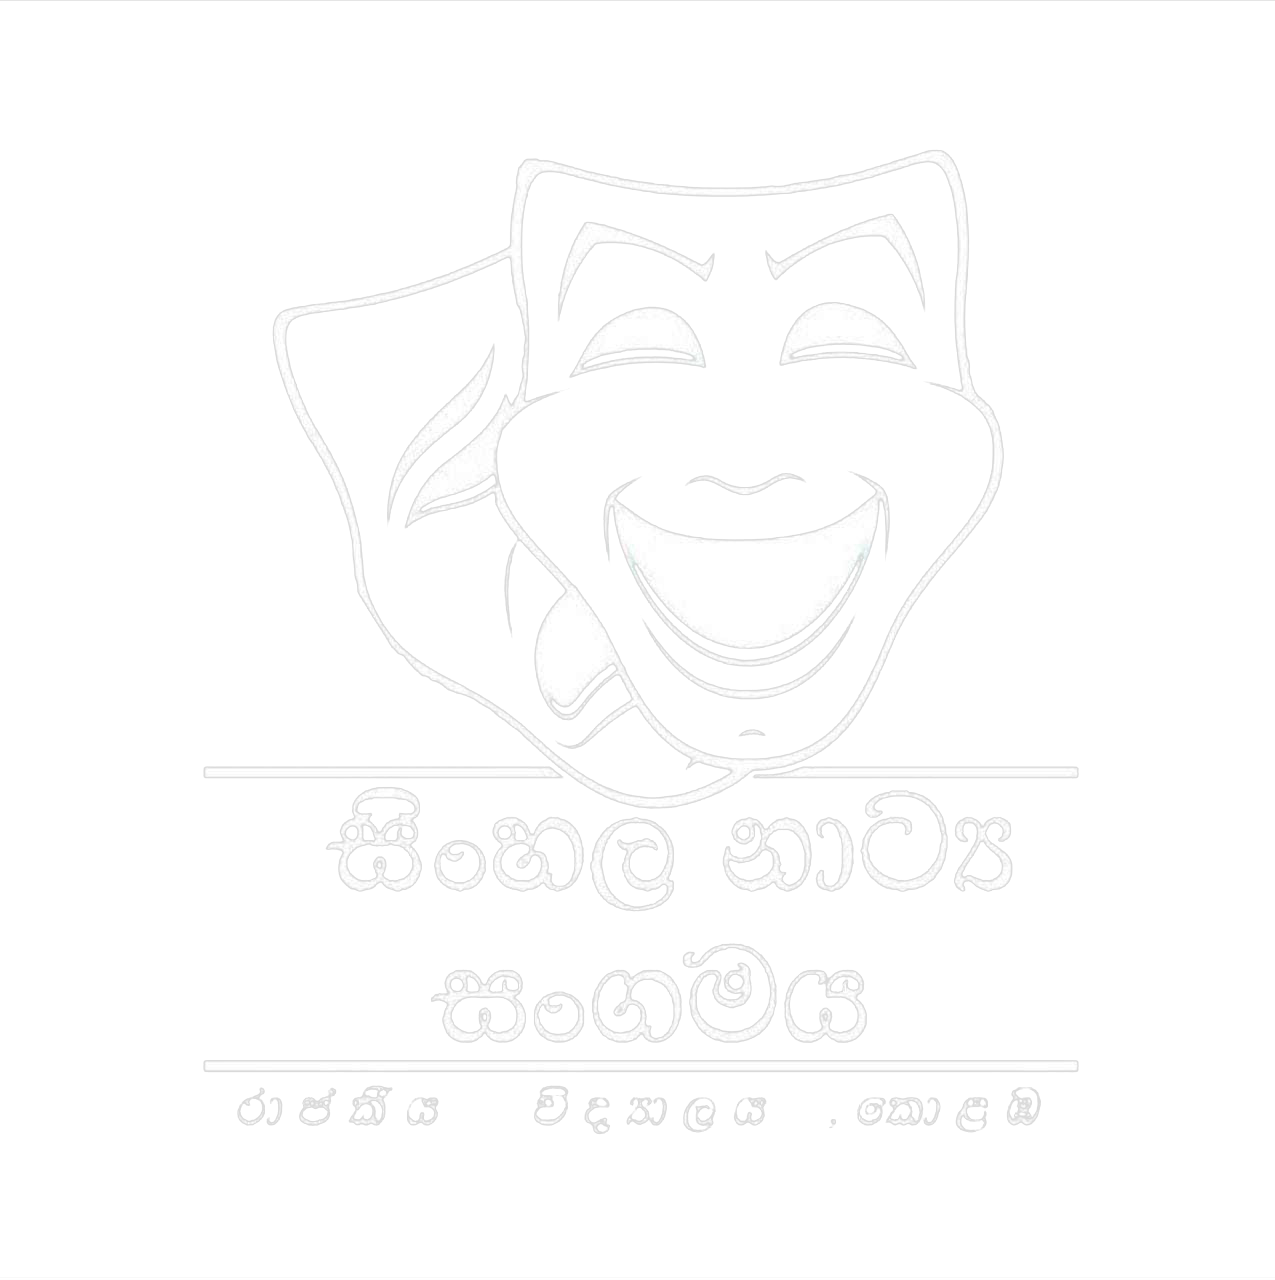 Sinhala Drama Society - The Royal College